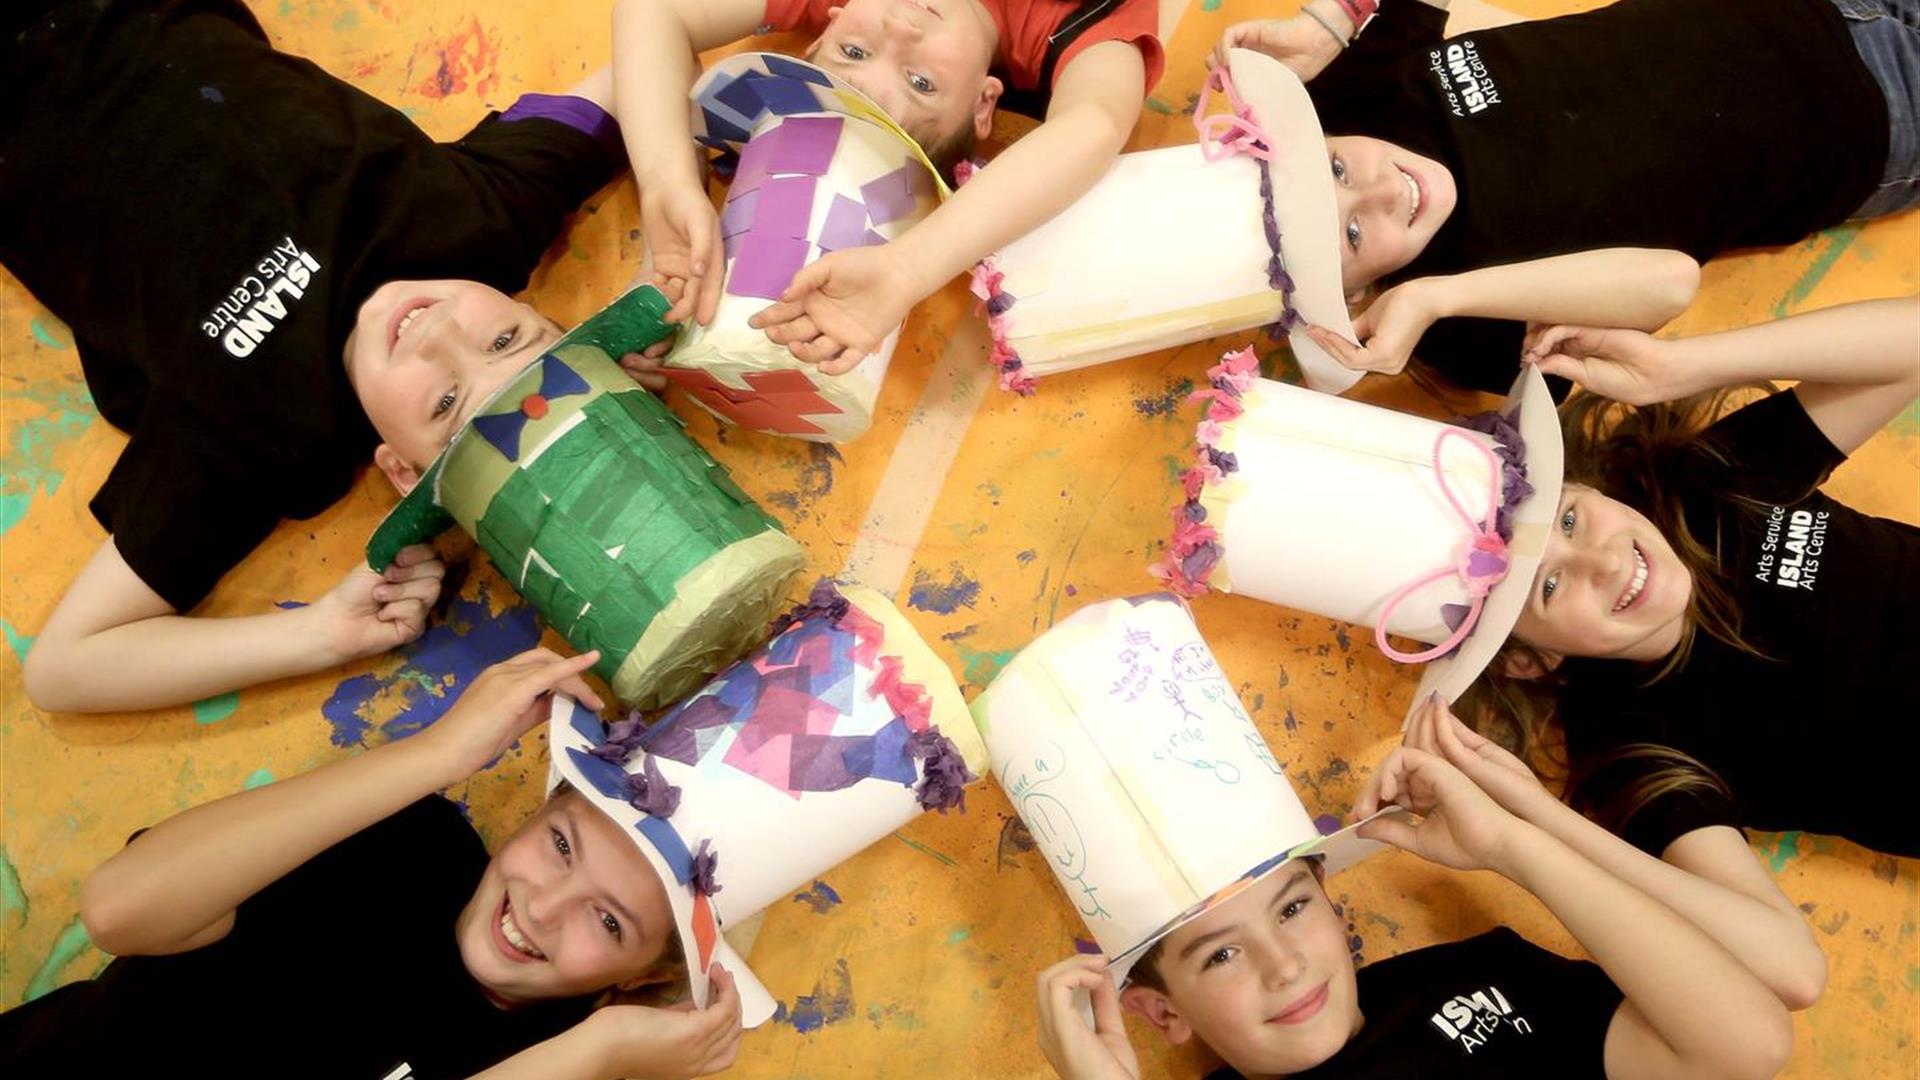 Children lying on floor wearing large hats